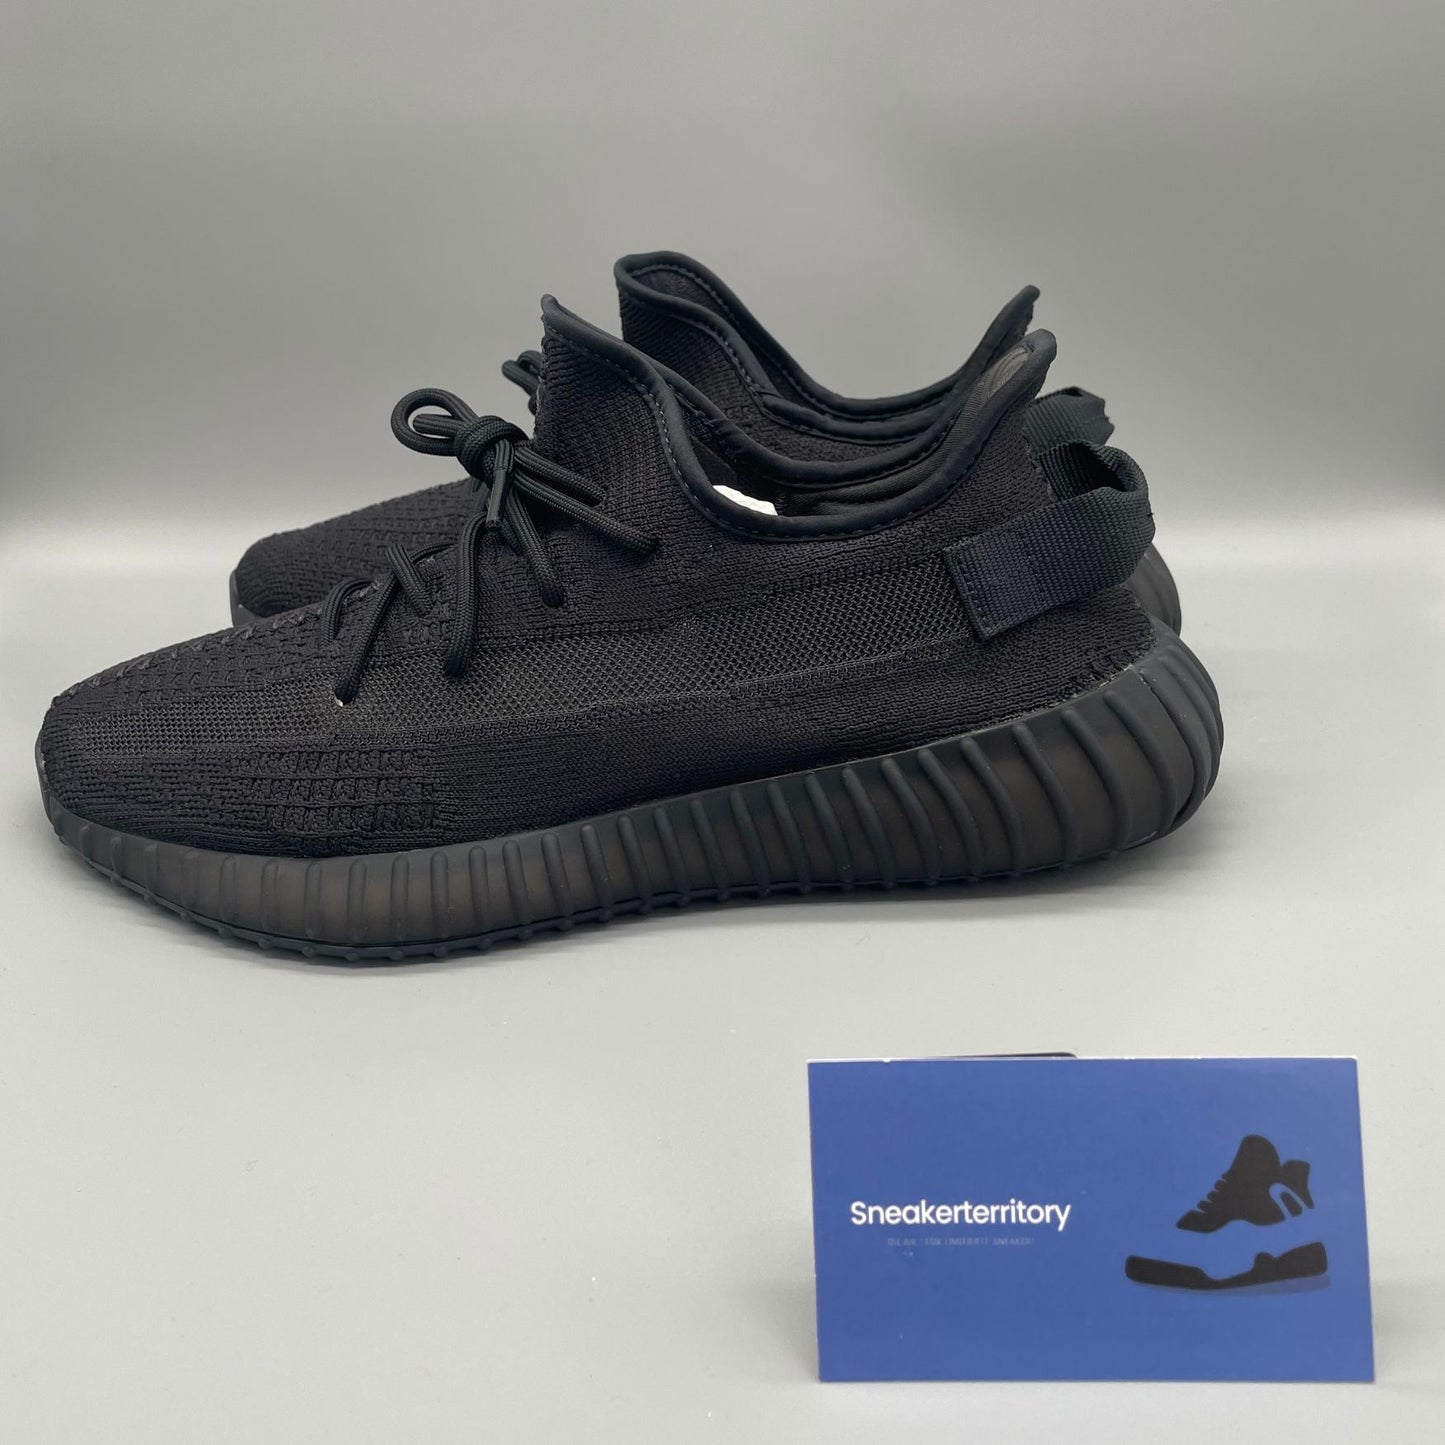 Adidas Yeezy Boost 350 V2 Onyx - Sneakerterritory; Sneaker Territory 2